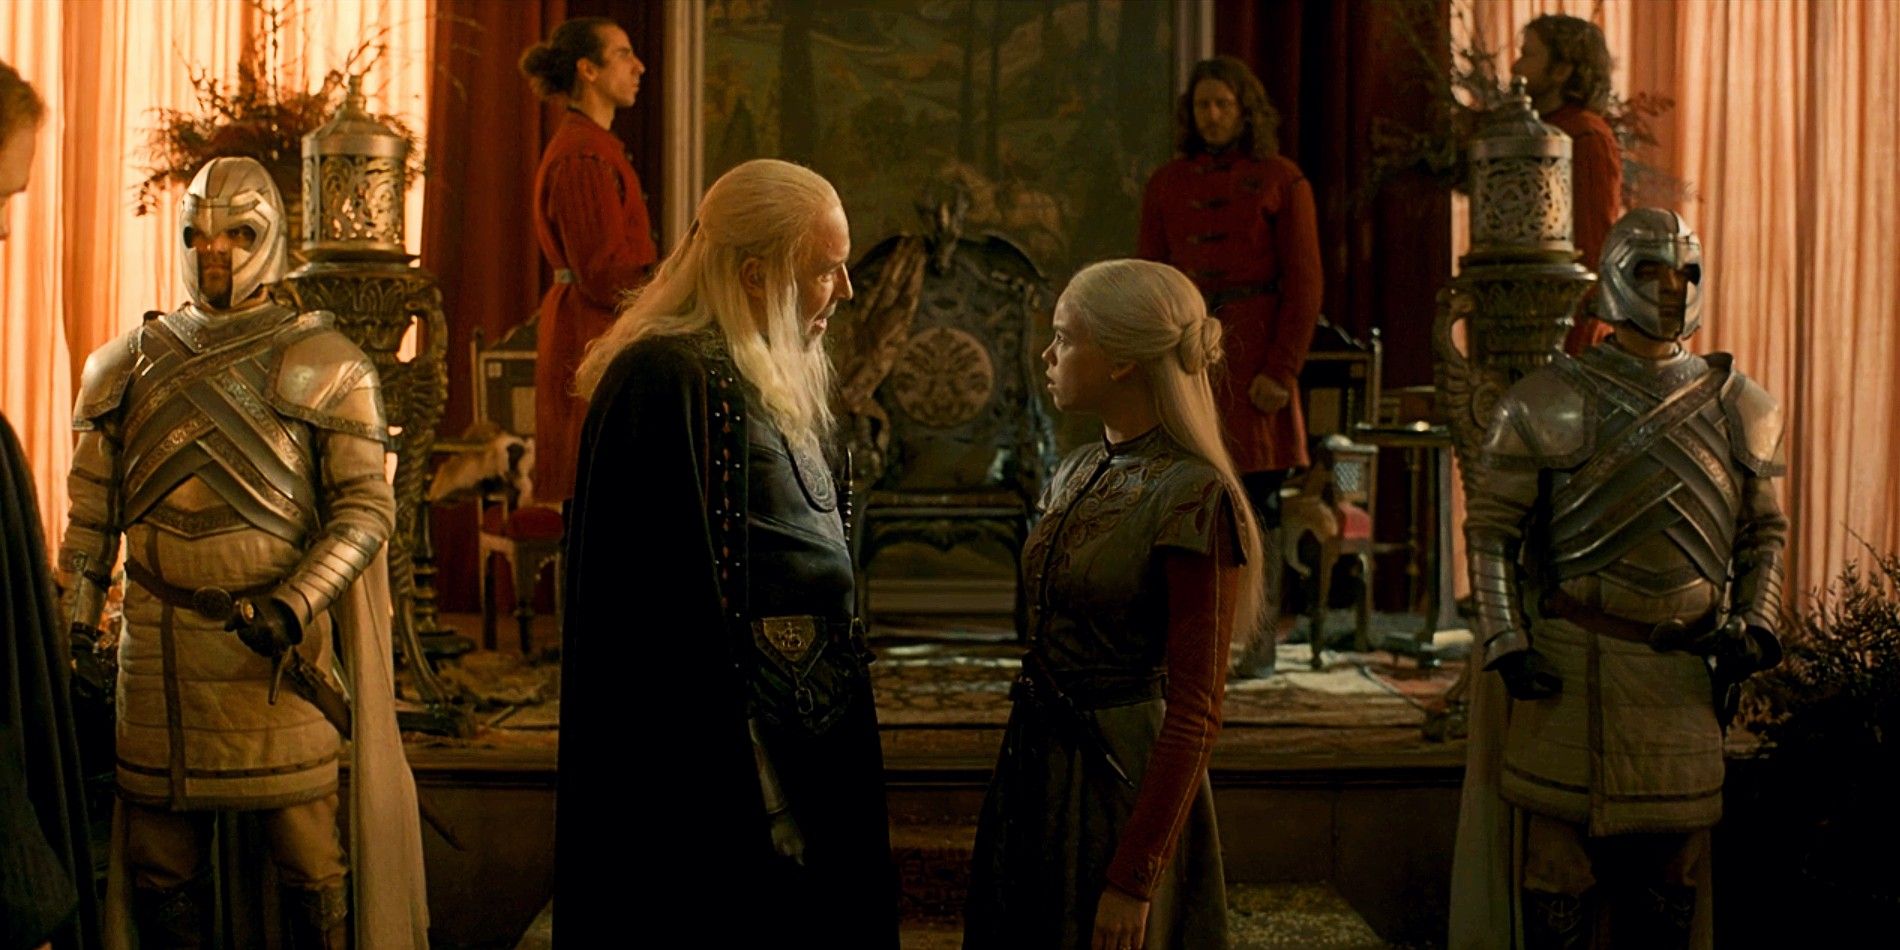 Paddy Considine as Viserys I Targaryen and Milly Alcock as Rhaenyra Targaryen in House of the Dragon